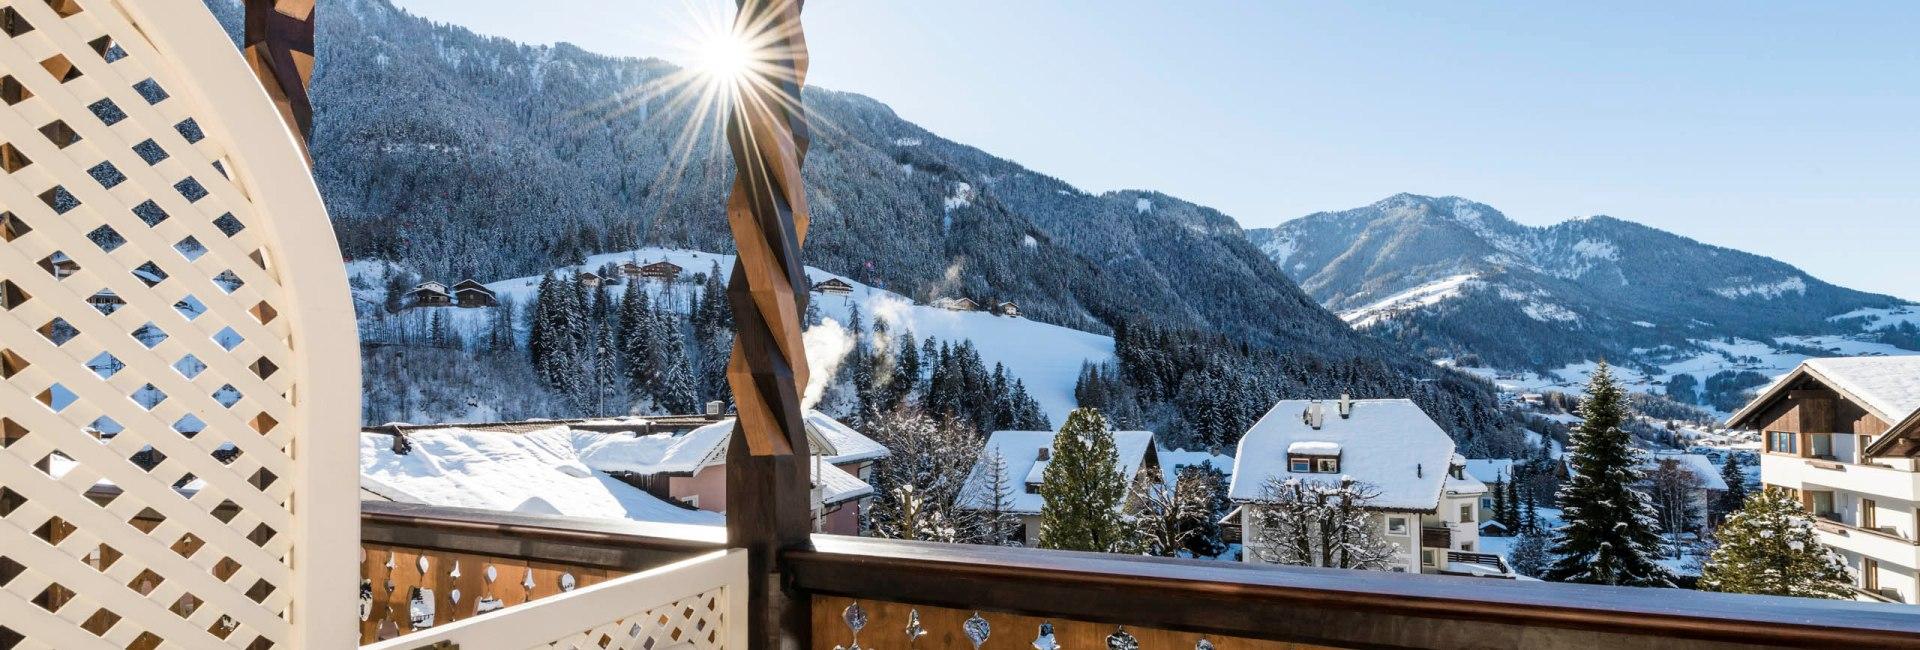 Hotel am Stetteneck, South Tyrol